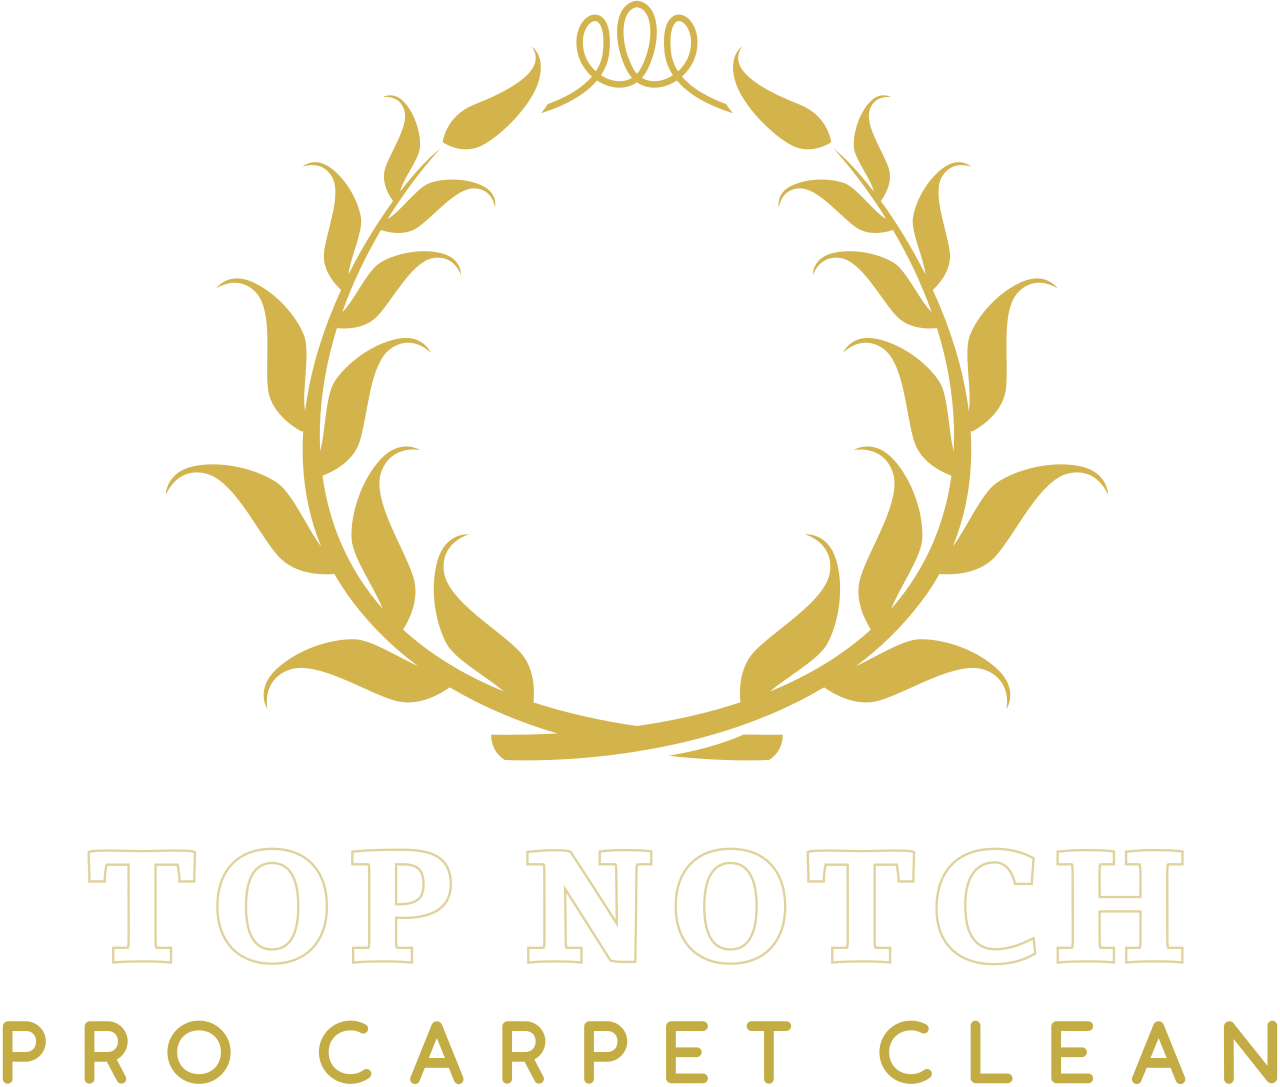 Top Notch's logo